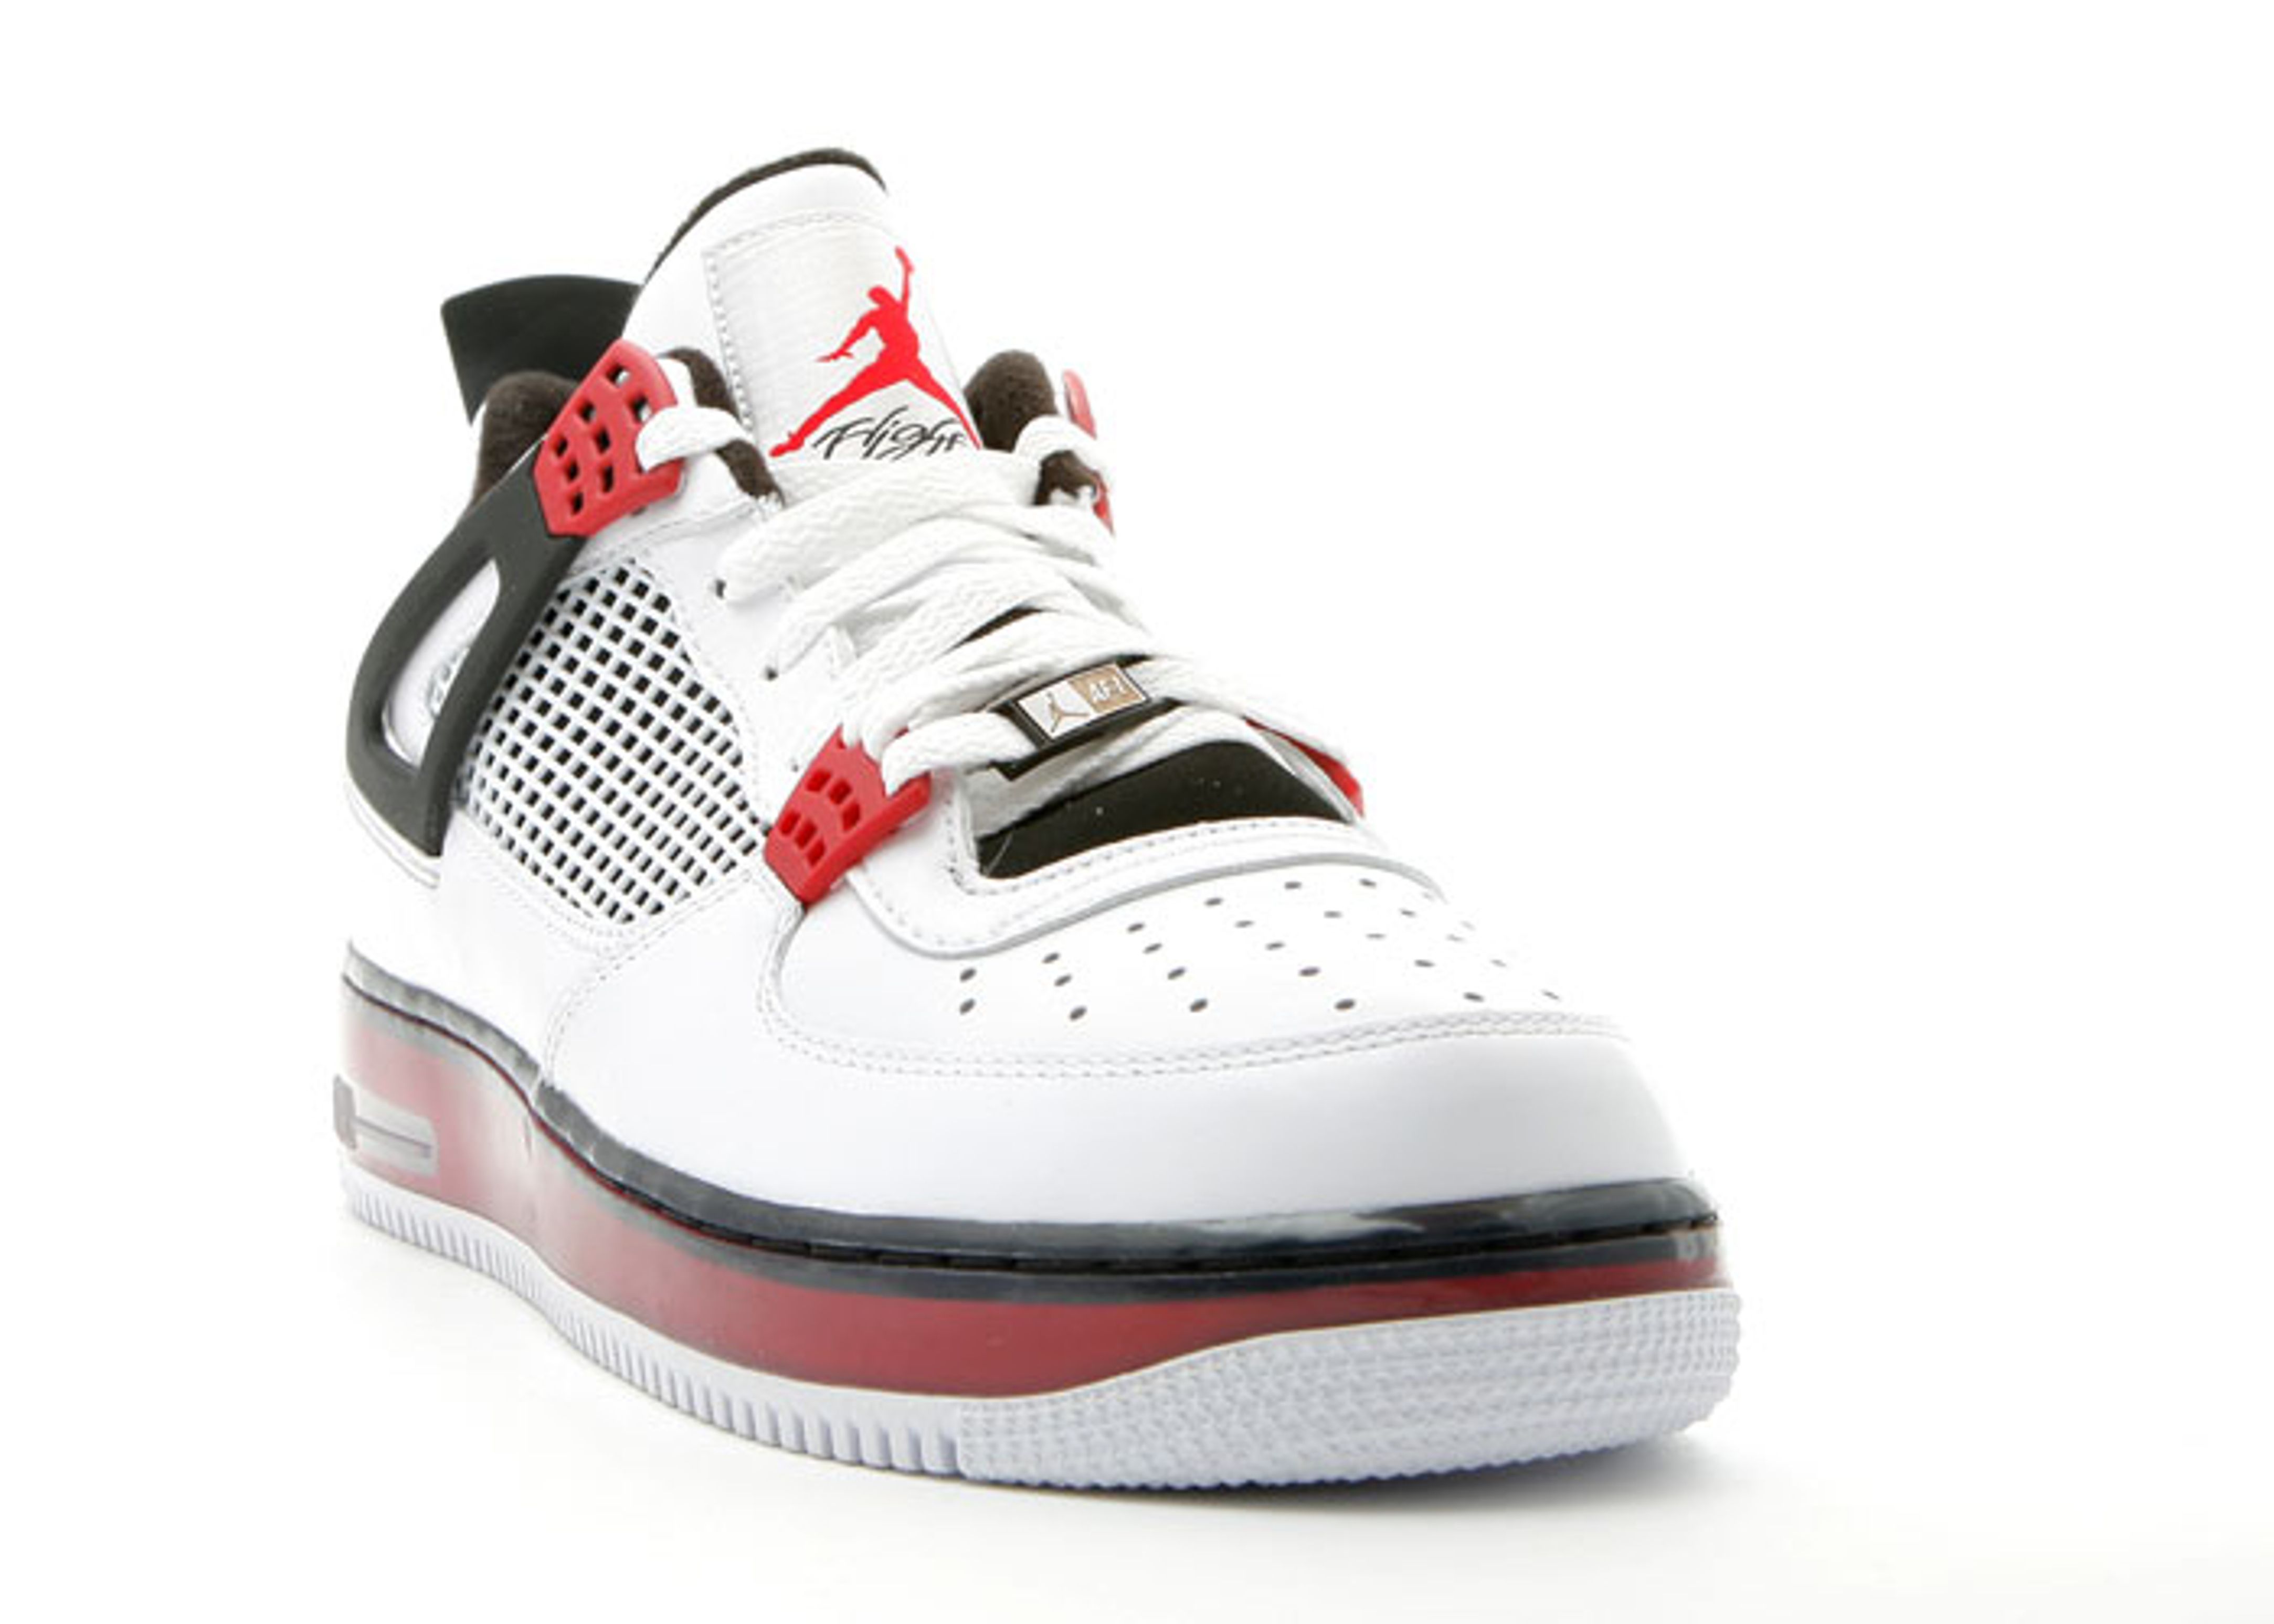 Nike AJF4 - Jordan Fusion 4 - White Varsity Red - 364342-161 - Size 13 -  New 